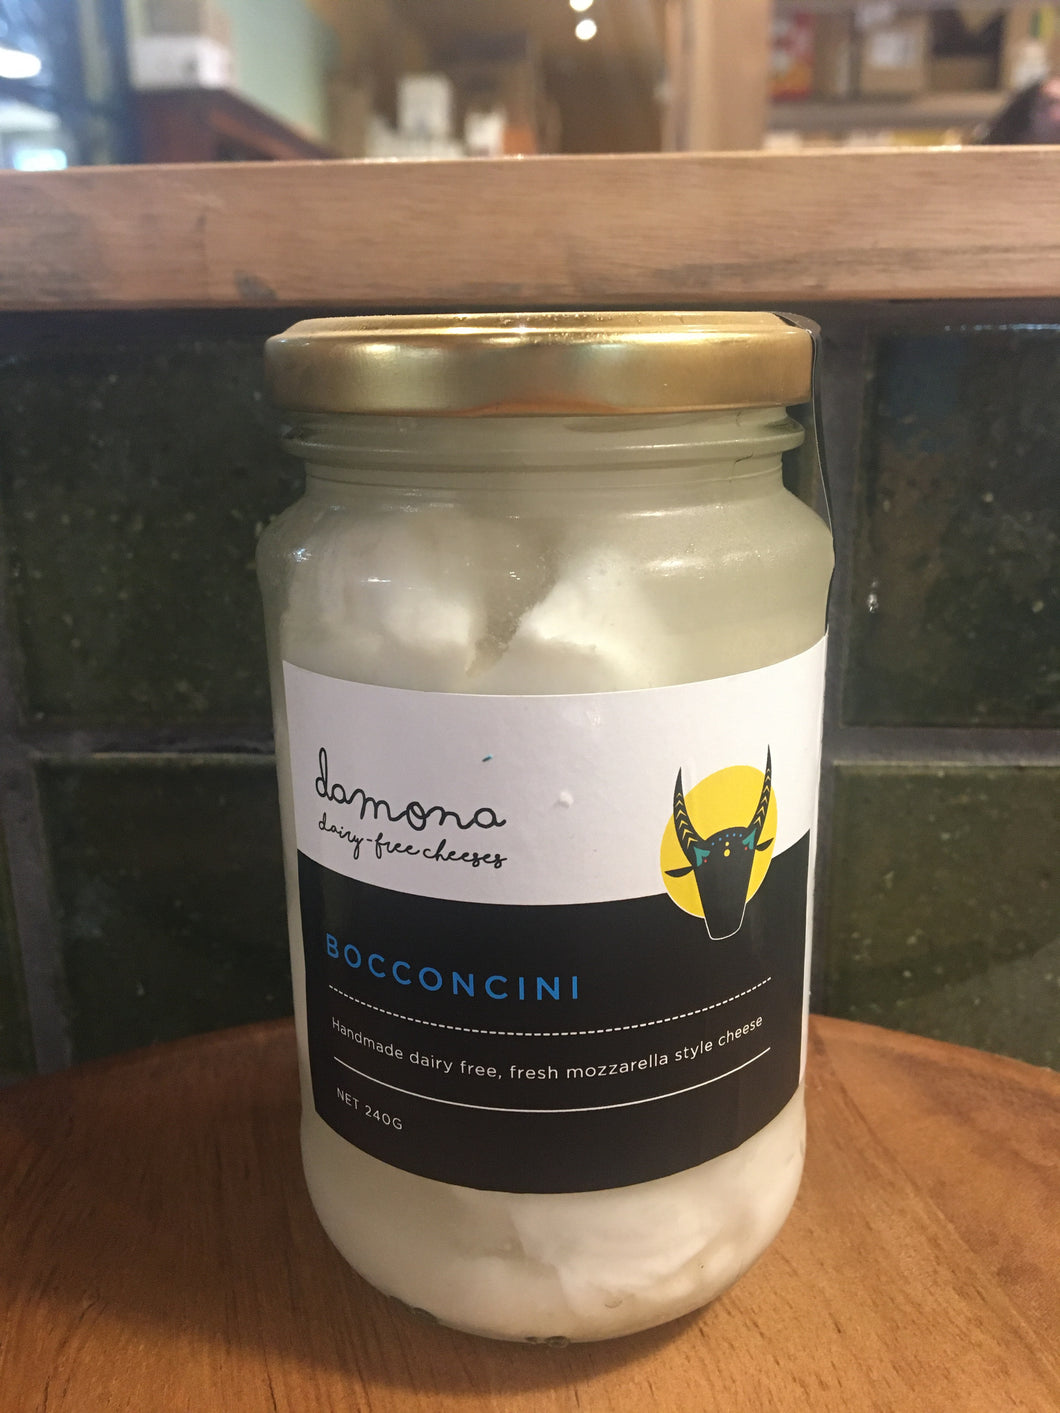 Damona Dairy Free Bocconcini 240g